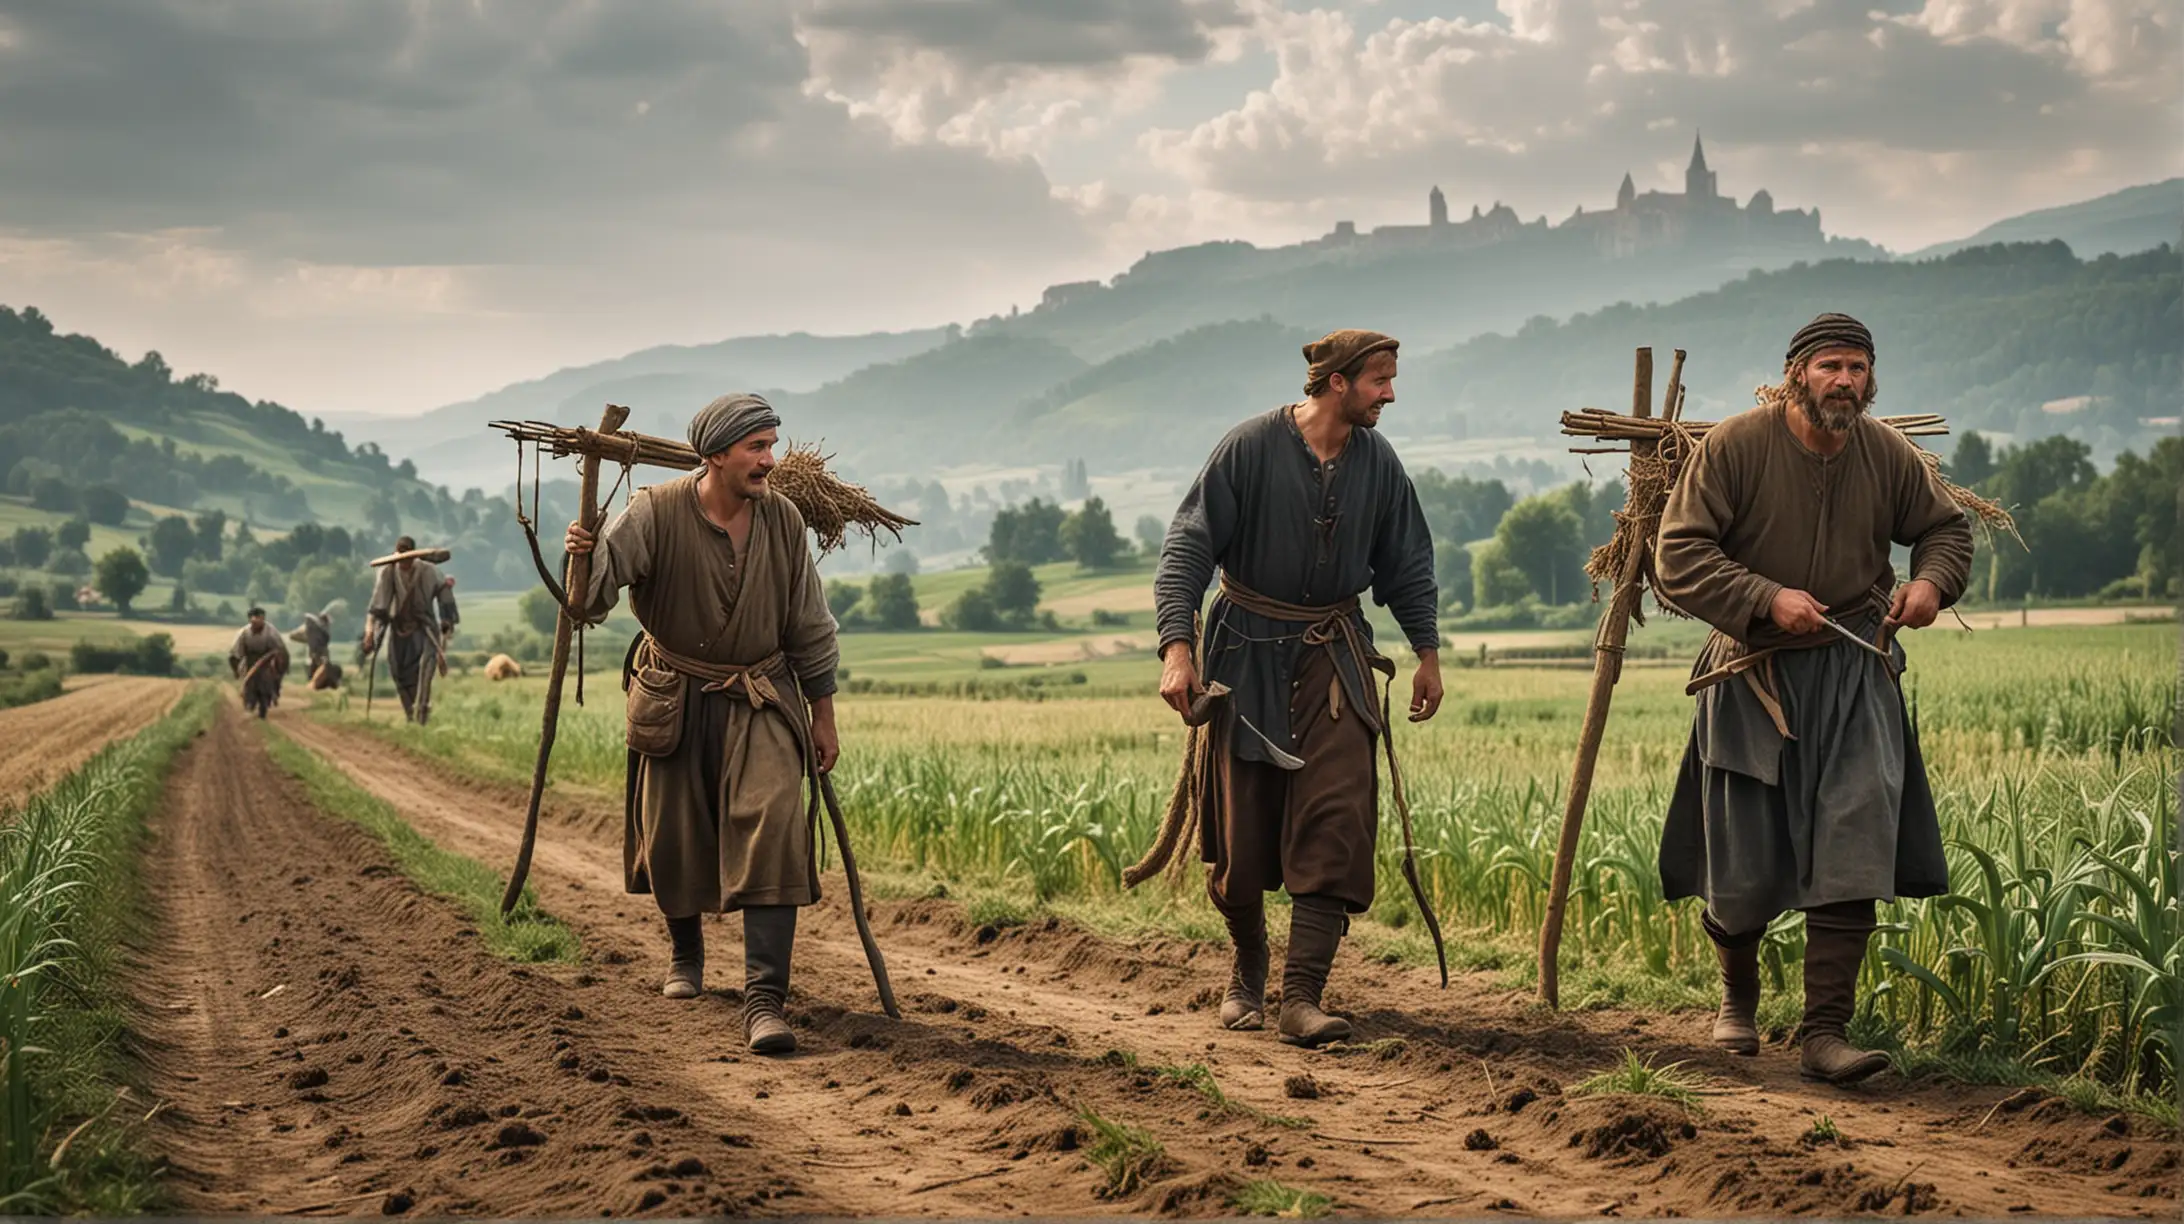 Medieval European Peasants Working the Fields